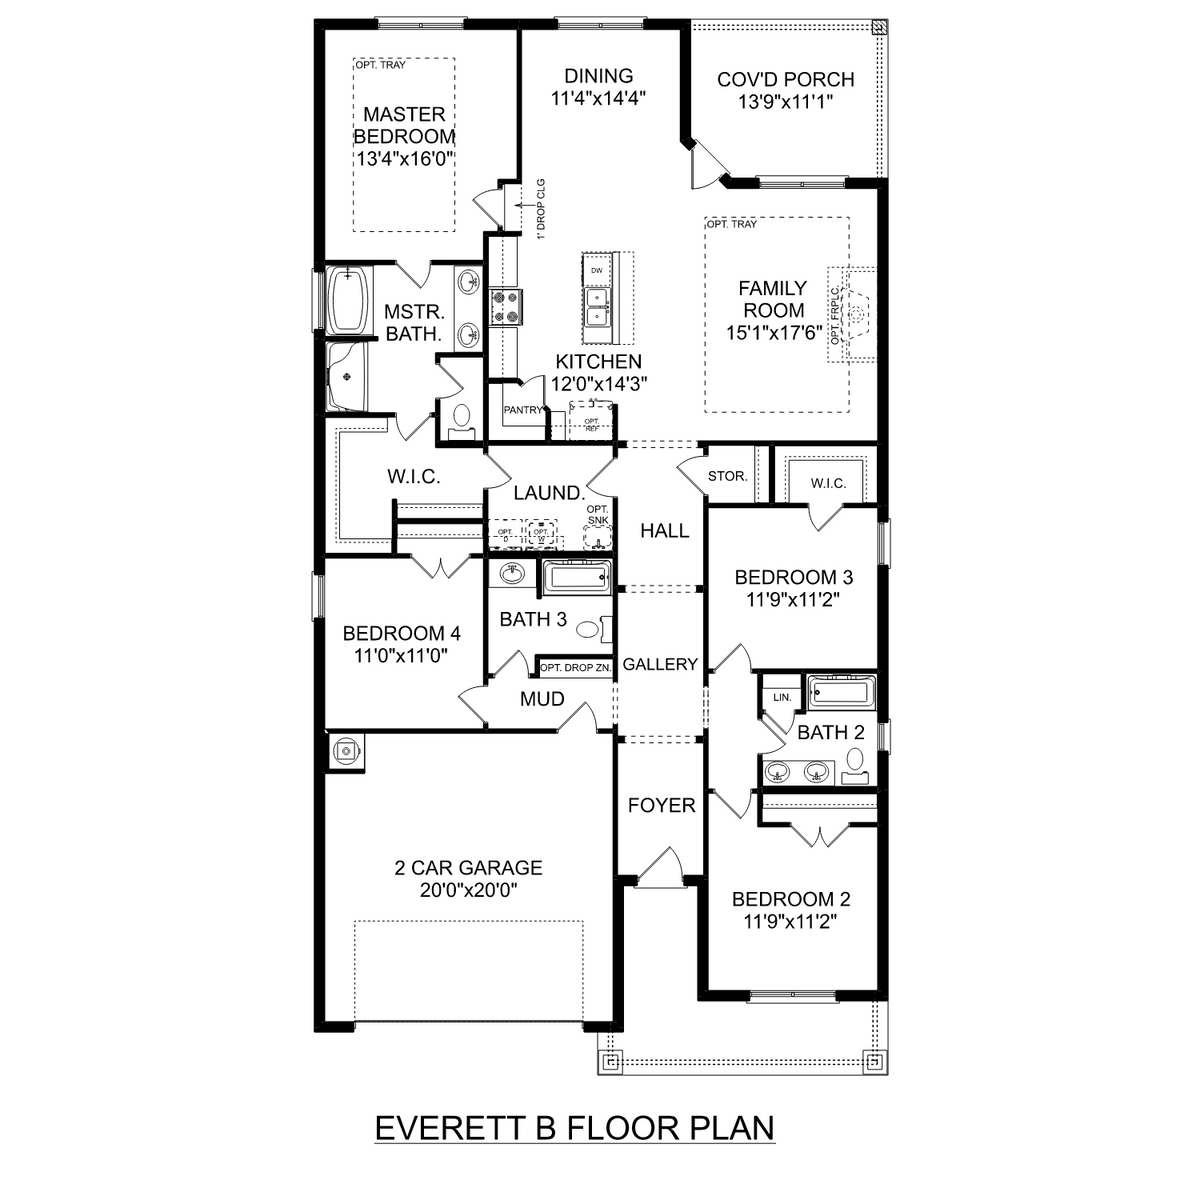 1 - The Everett B floor plan layout for 29540 Canoe Circle in Davidson Homes' Creekside community.